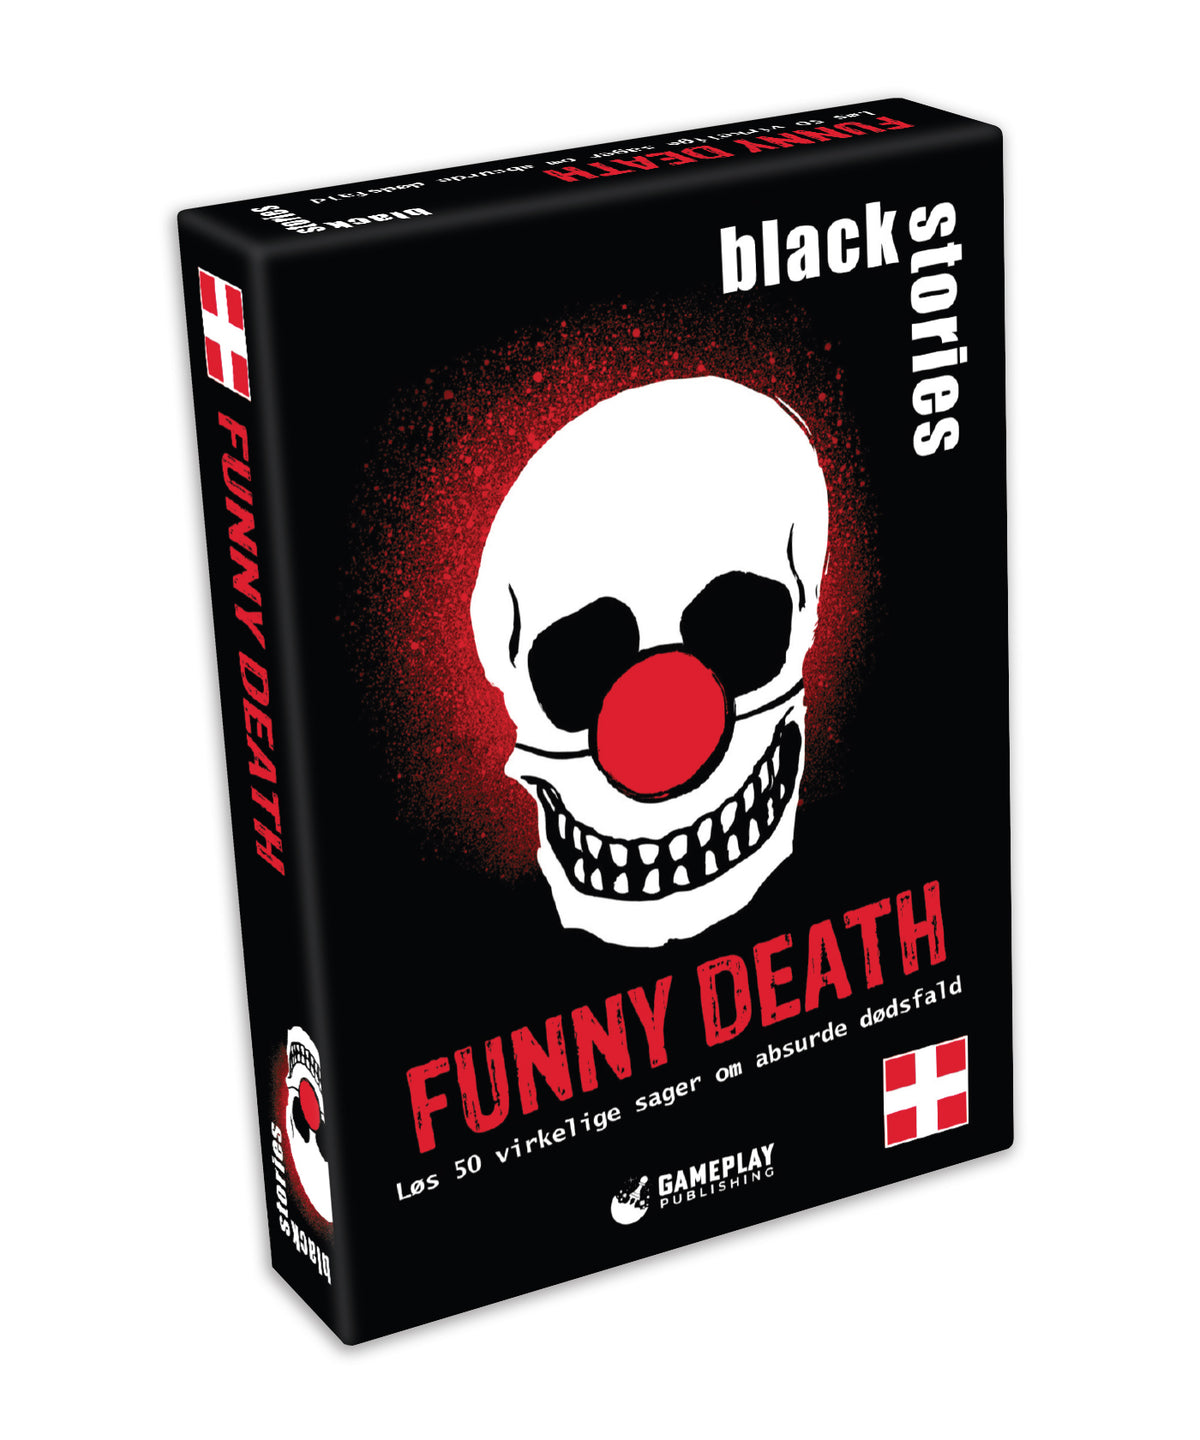 Black Stories: Funny Death